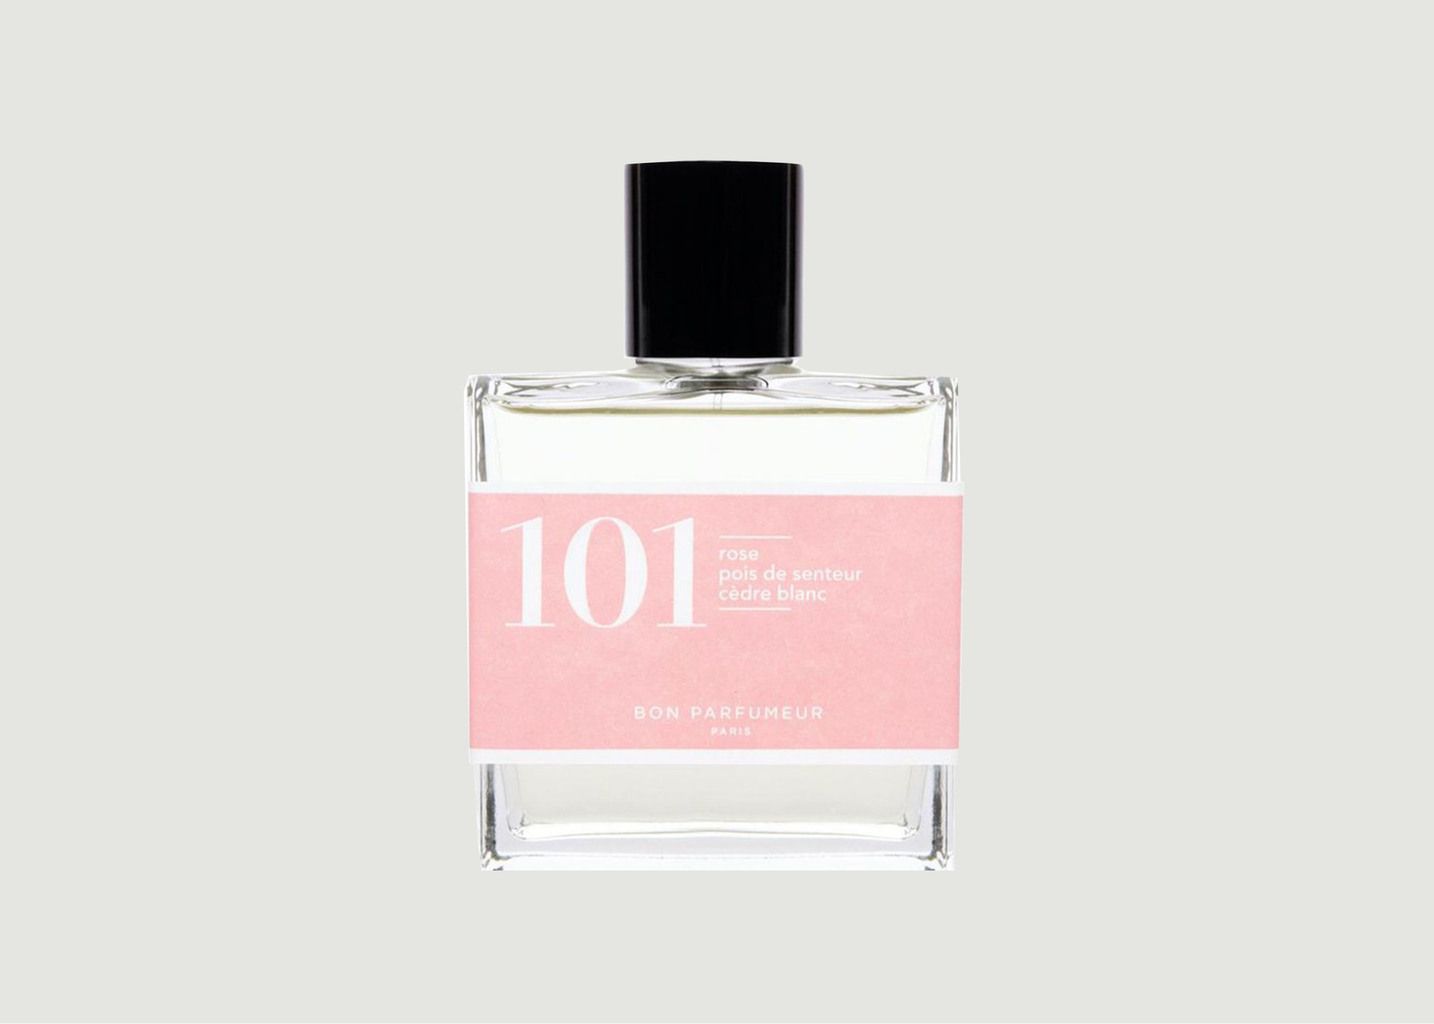 Eau de Parfum 101 : Rose, Sweet Pea, White Cedar - Bon Parfumeur